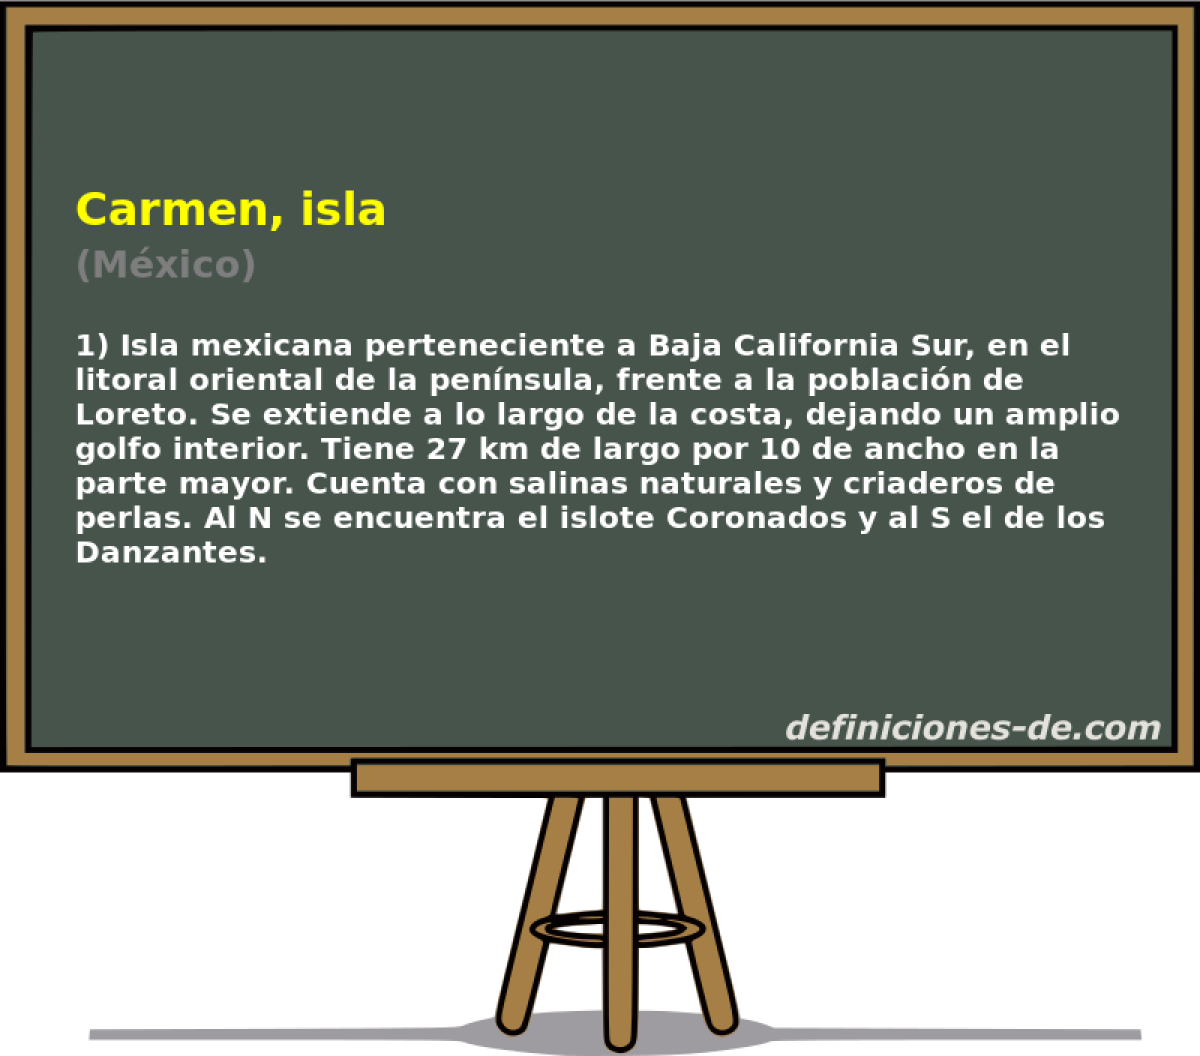 Carmen, isla (Mxico)